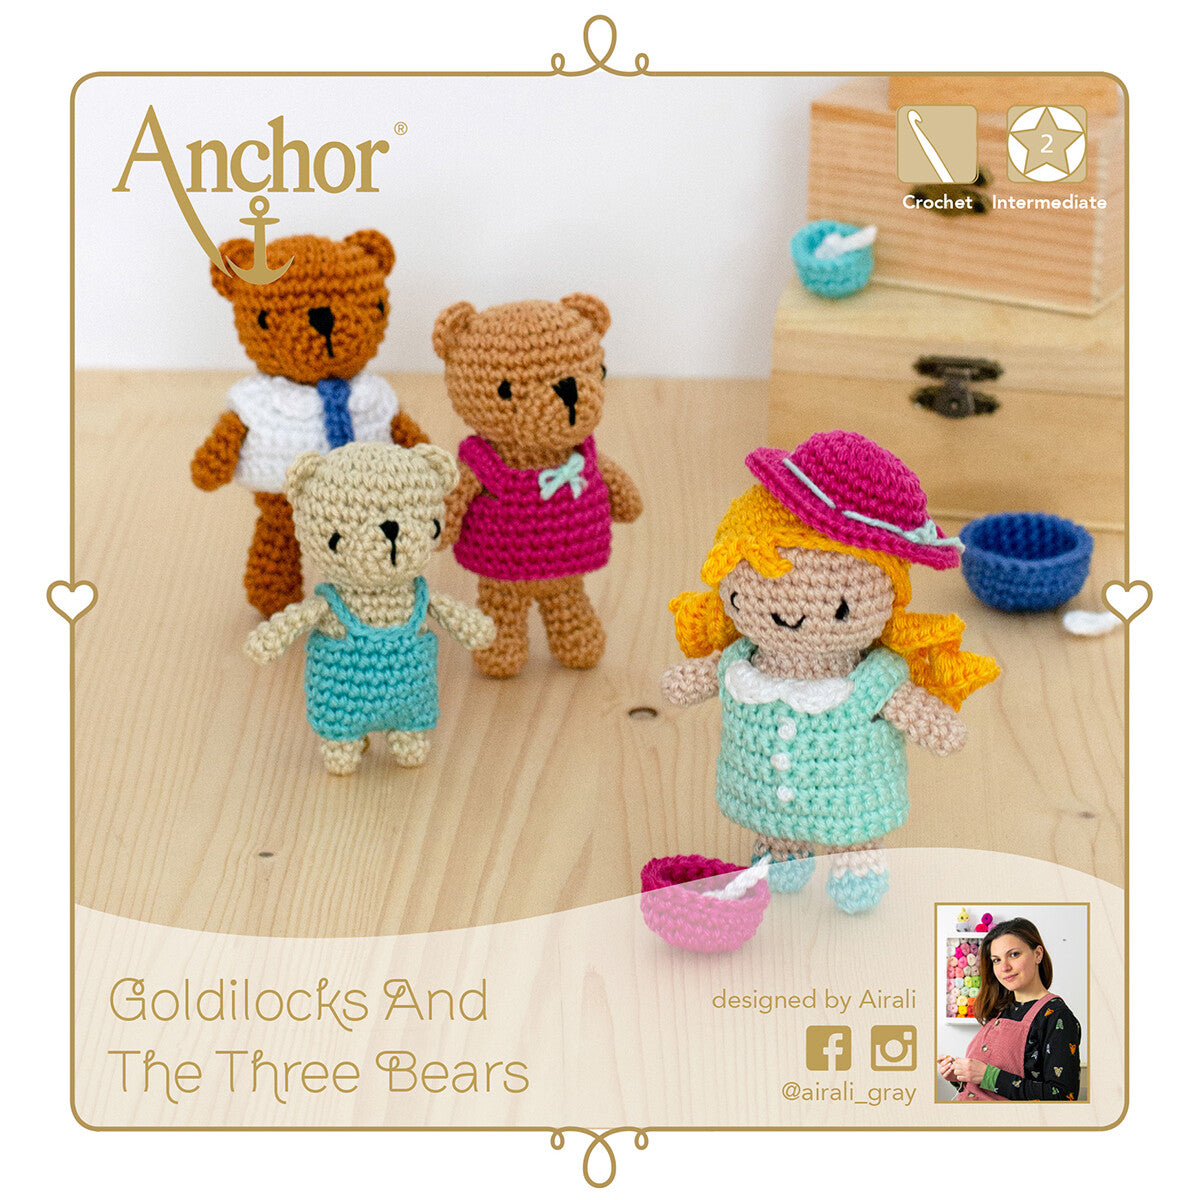 Anchor Goldilocks And The Three Bears Amigurumi Set - A28C003-09061